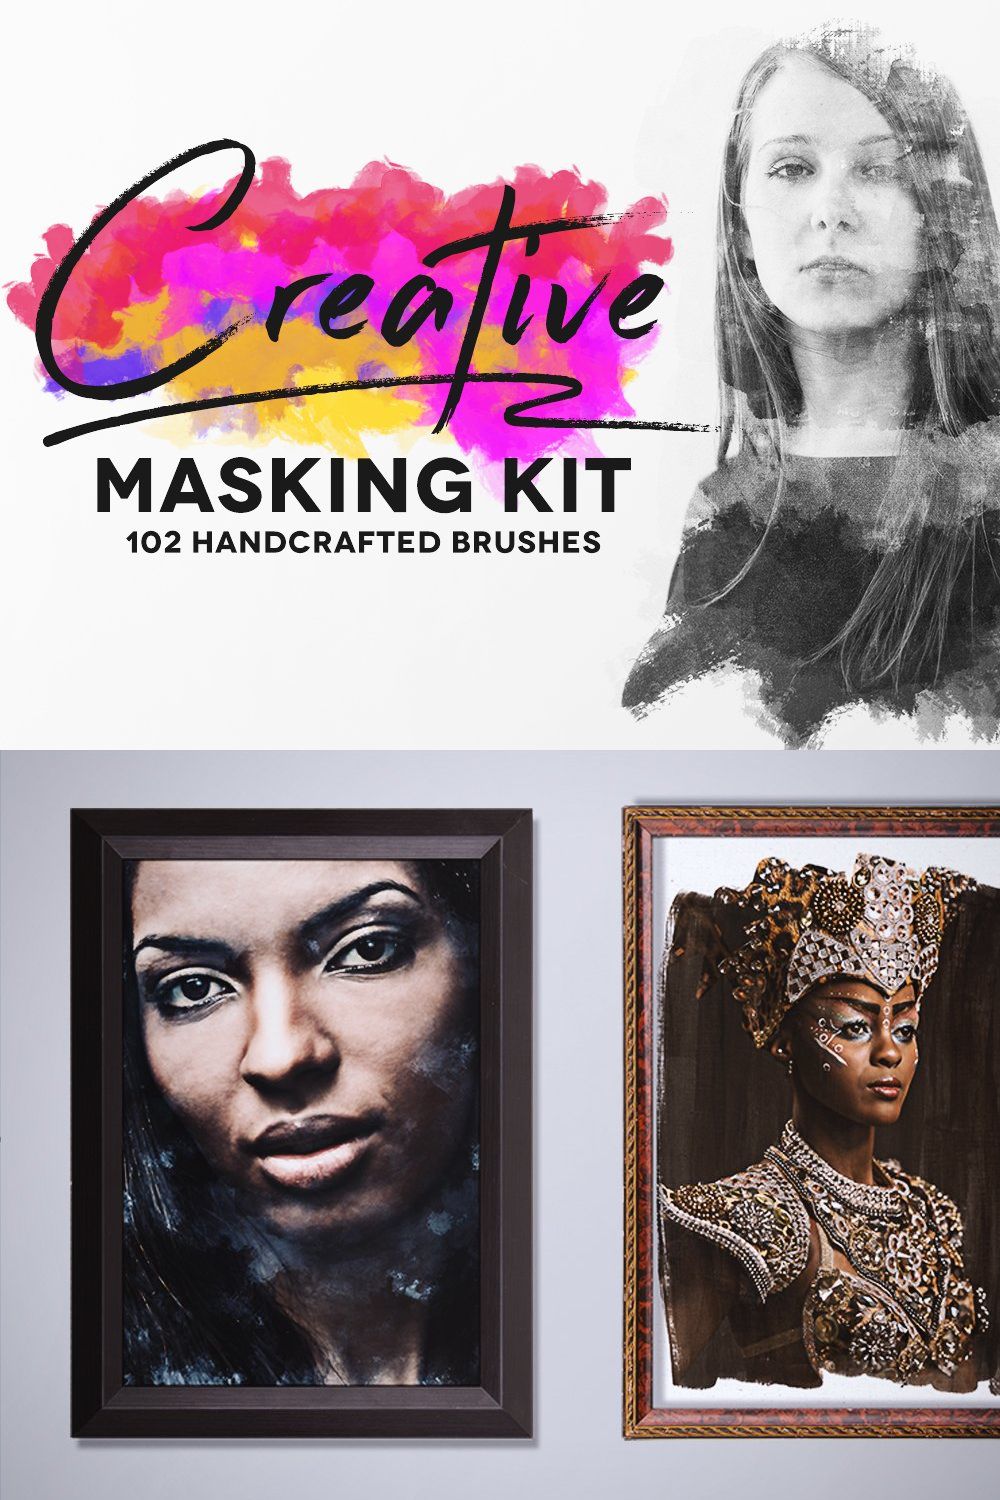 Creative Masking Kit pinterest preview image.